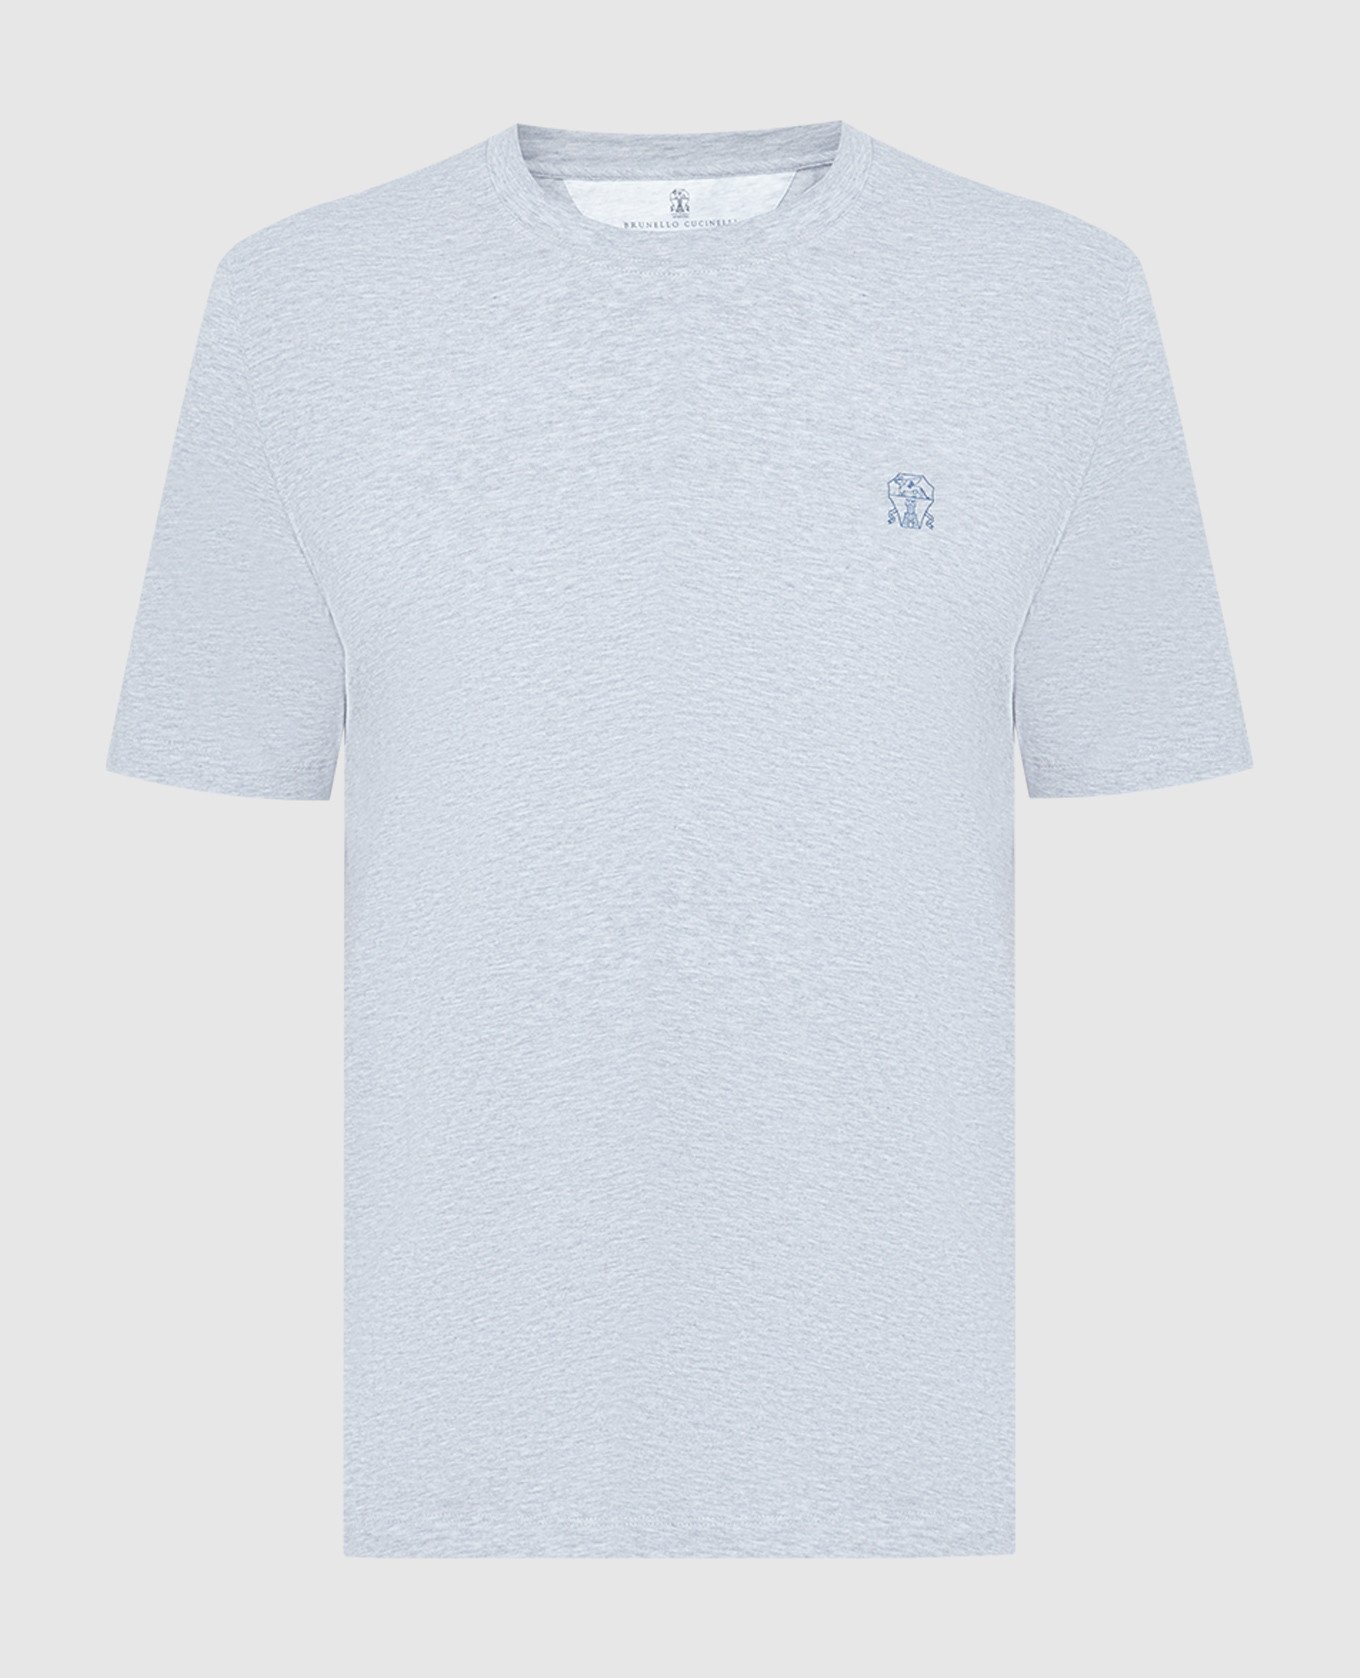 Gray t-shirt with logo emblem print